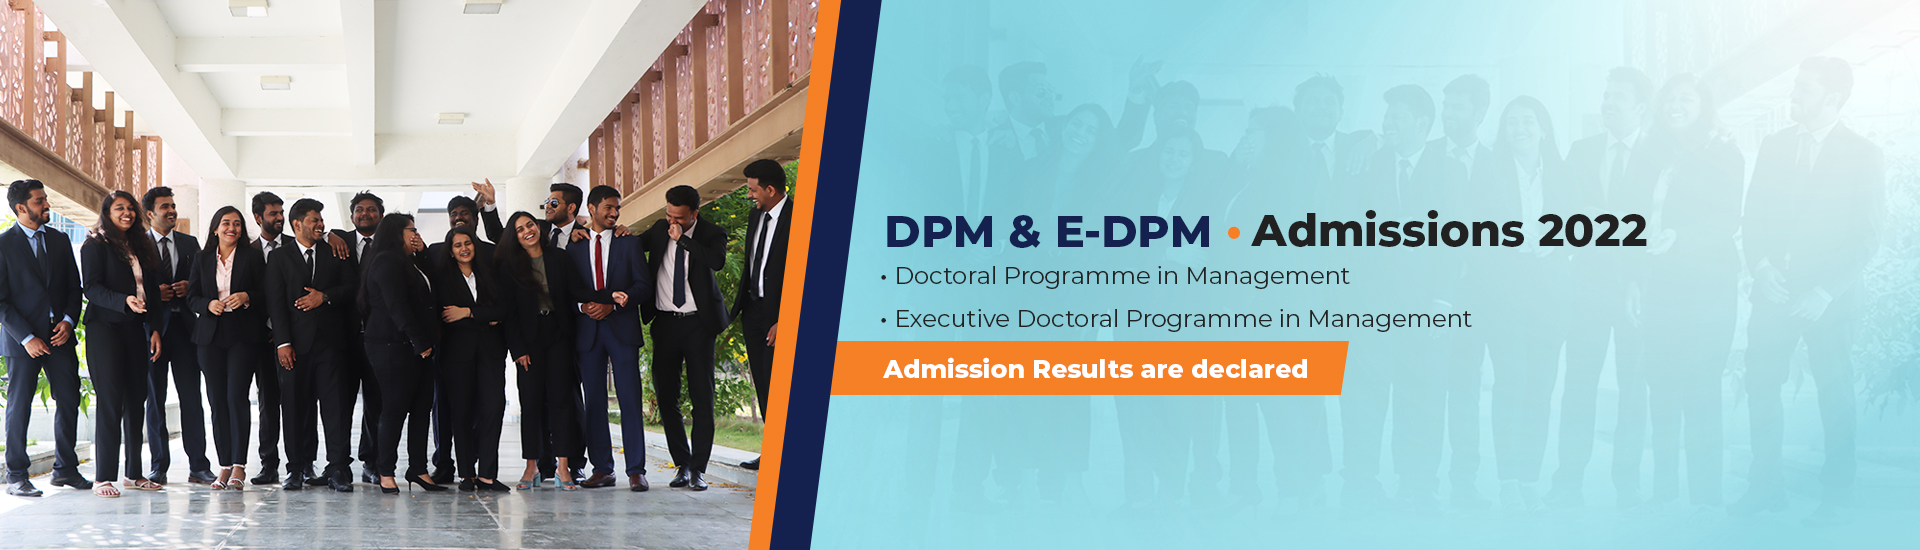 DPM and EDPM Admission 2022 